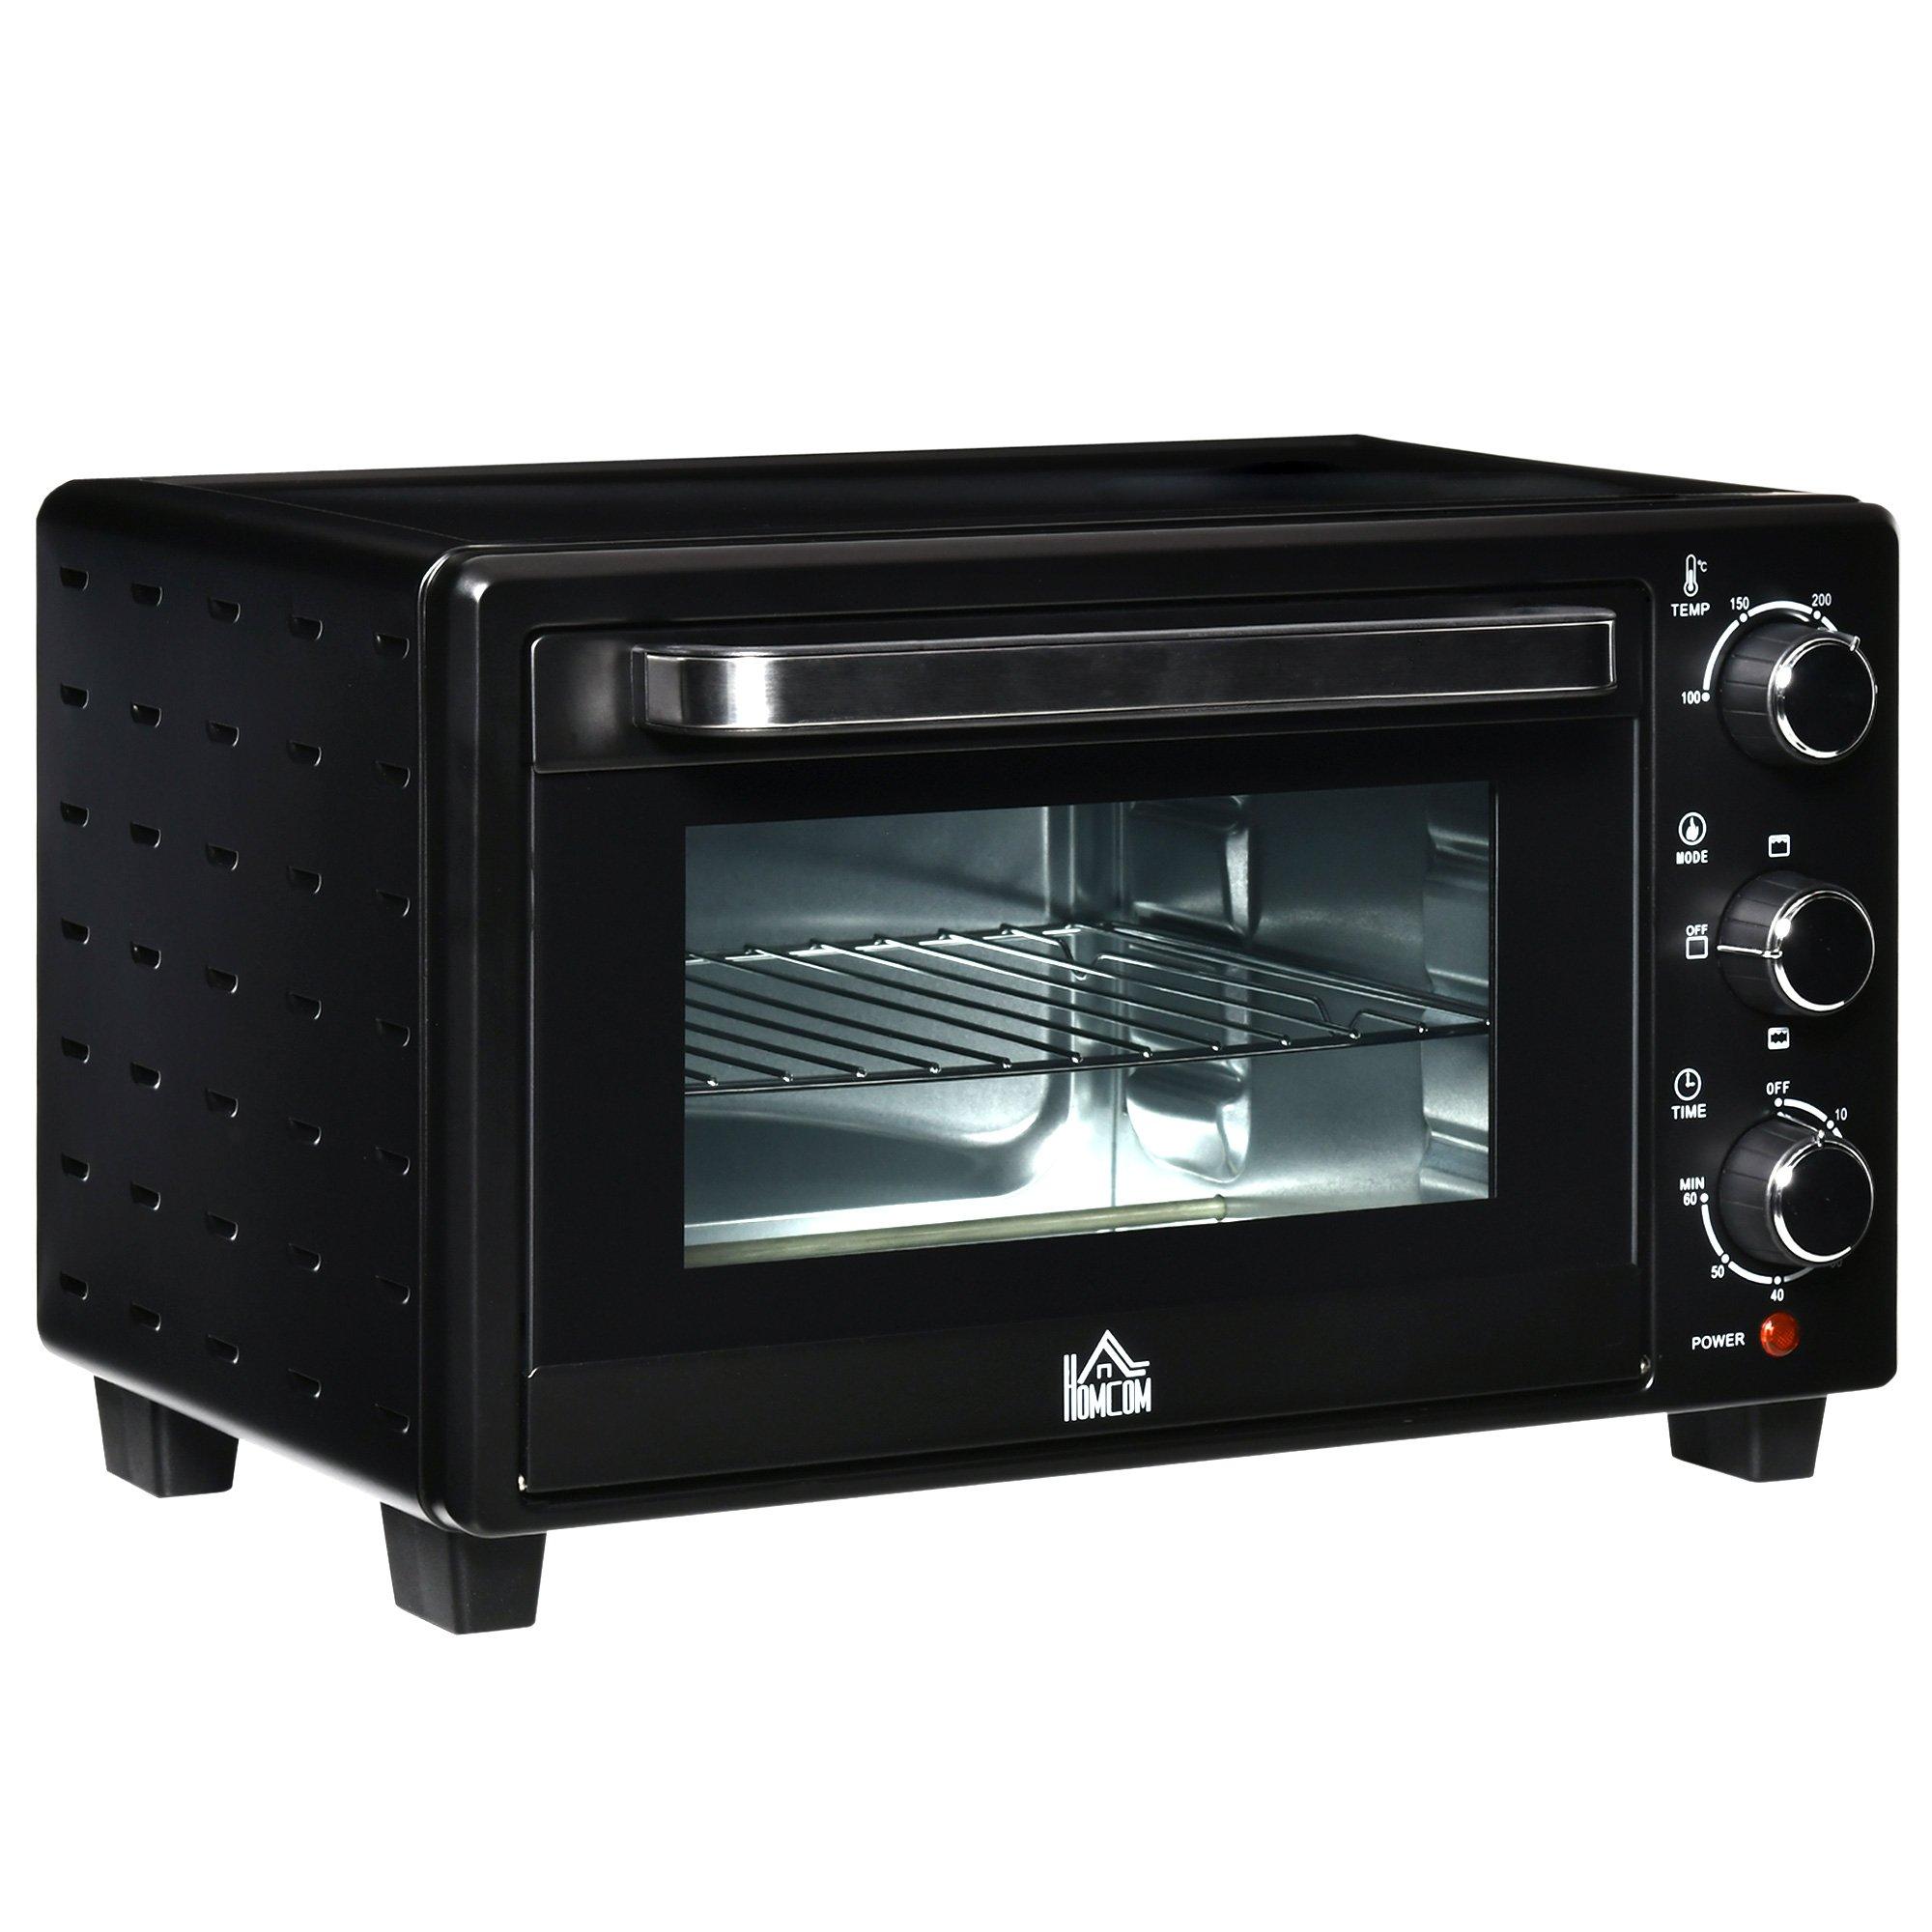 Mini Oven 21L Countertop Electric Toaster Oven Adjustable Temperature